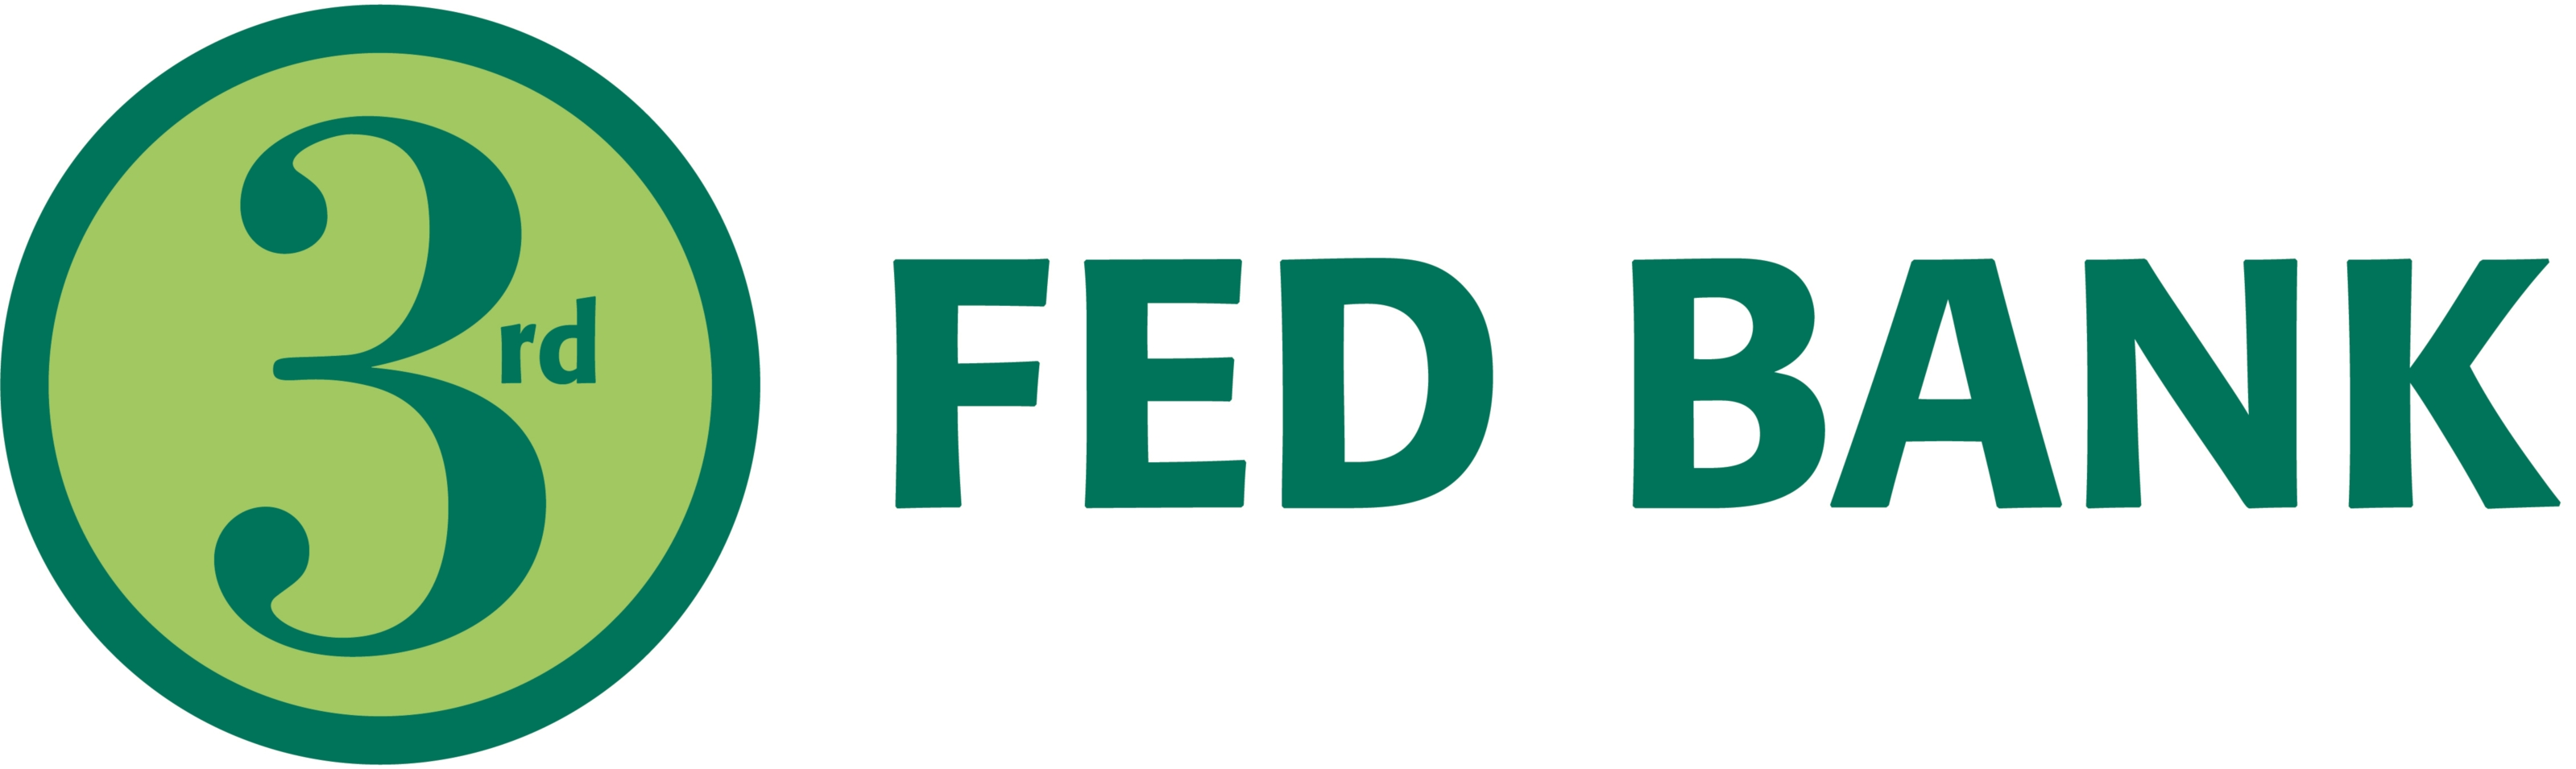 3rd Fed Bank logo